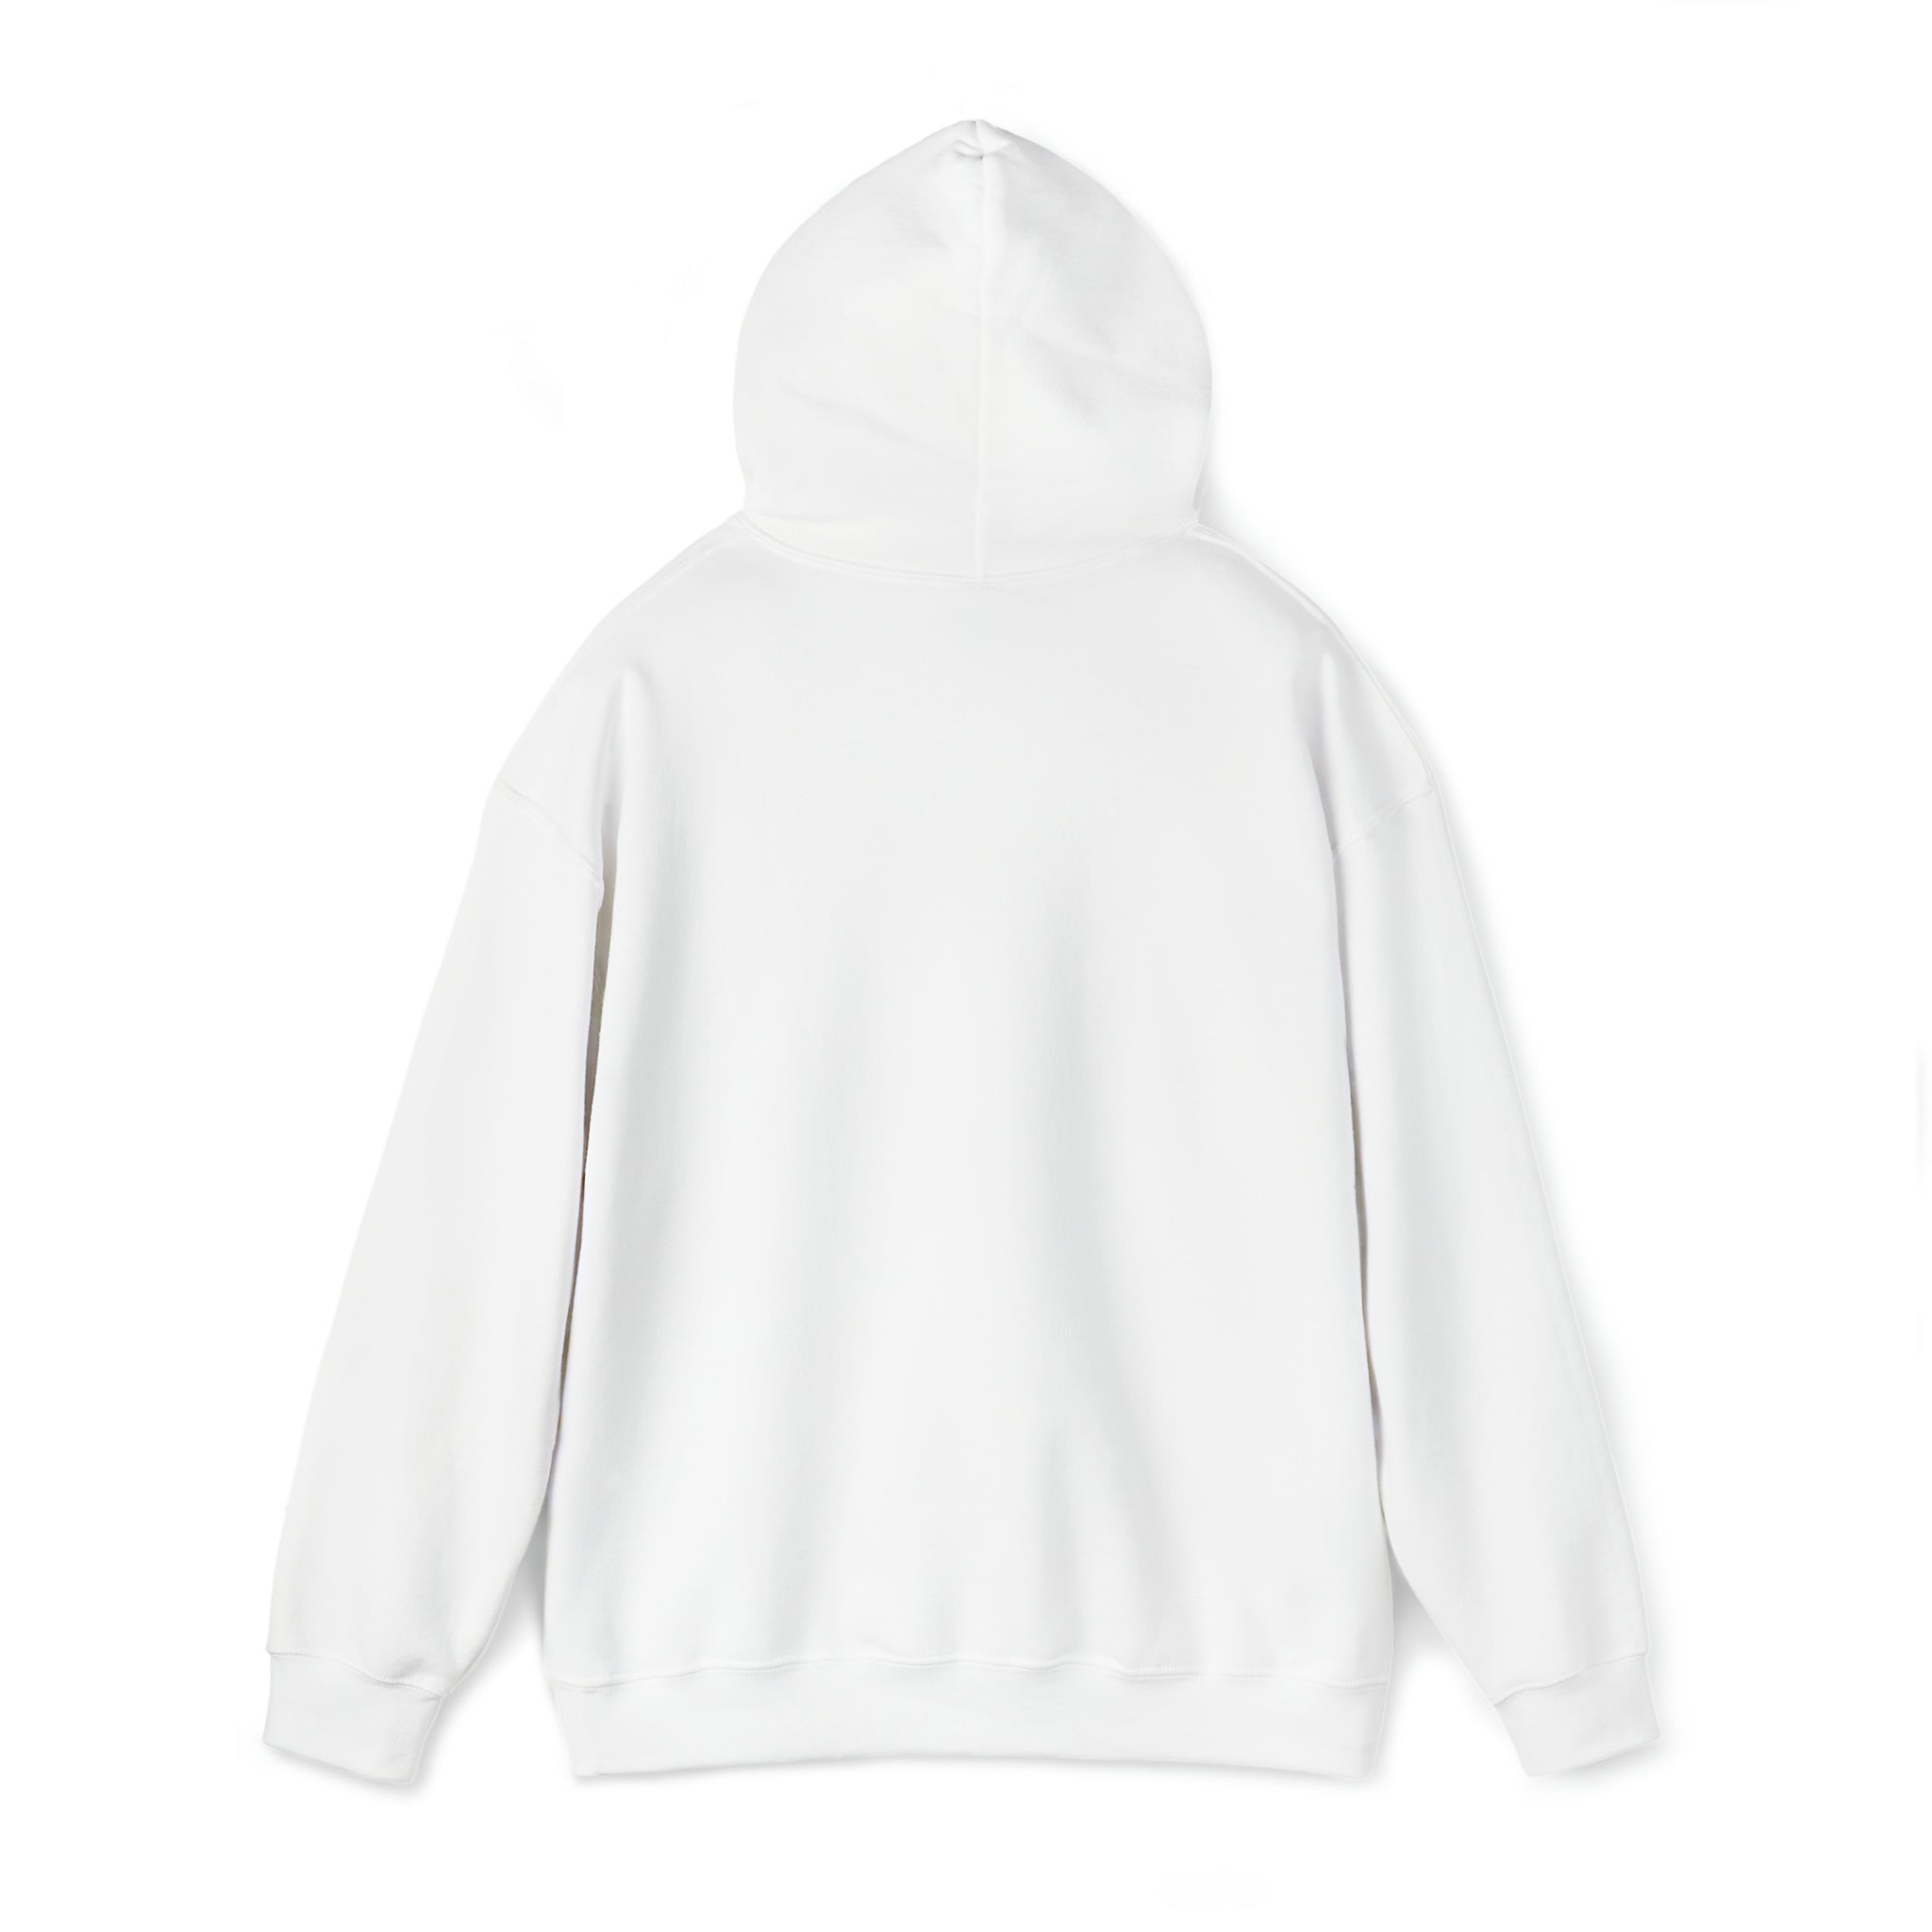 Hillman College Unisex Heavy Blend™ Hooded Sweatshirt